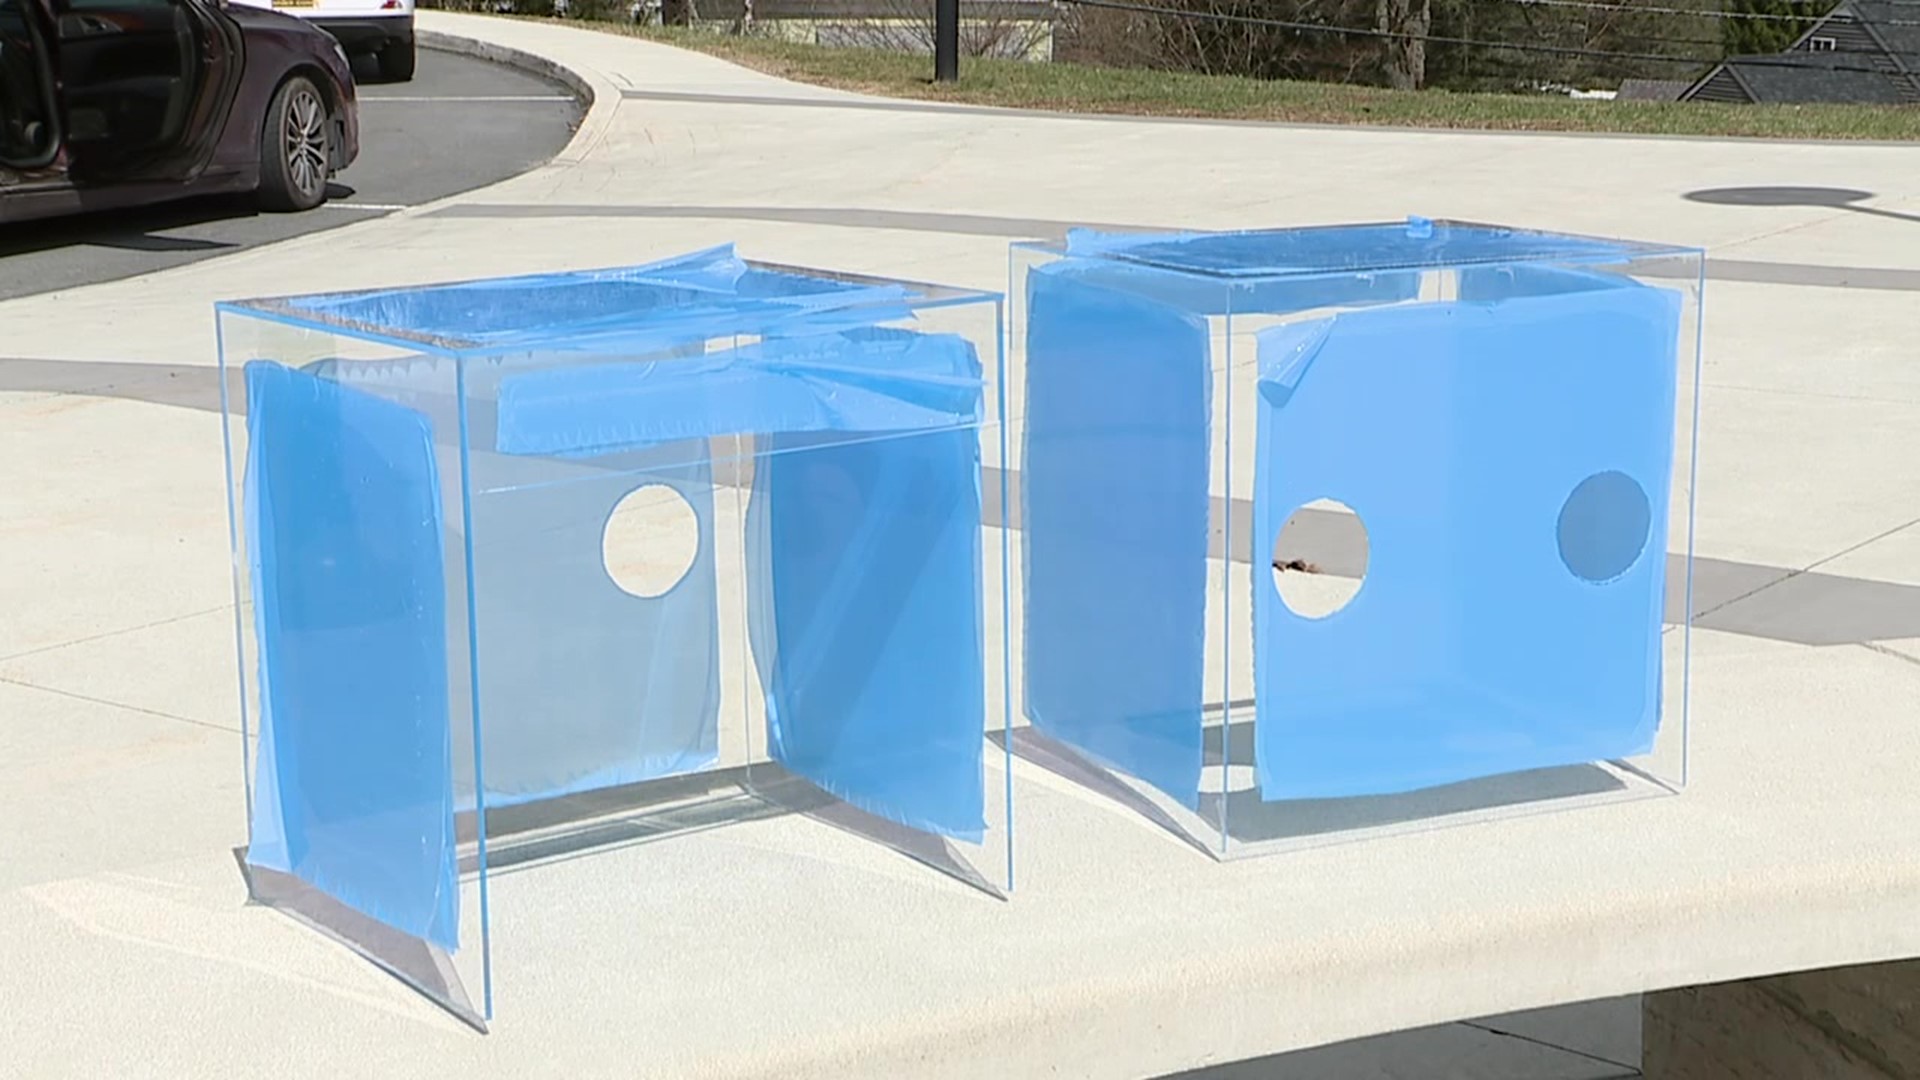 Robotics Team and community business team up to make aerosol boxes for Wayne Memorial Hospital.